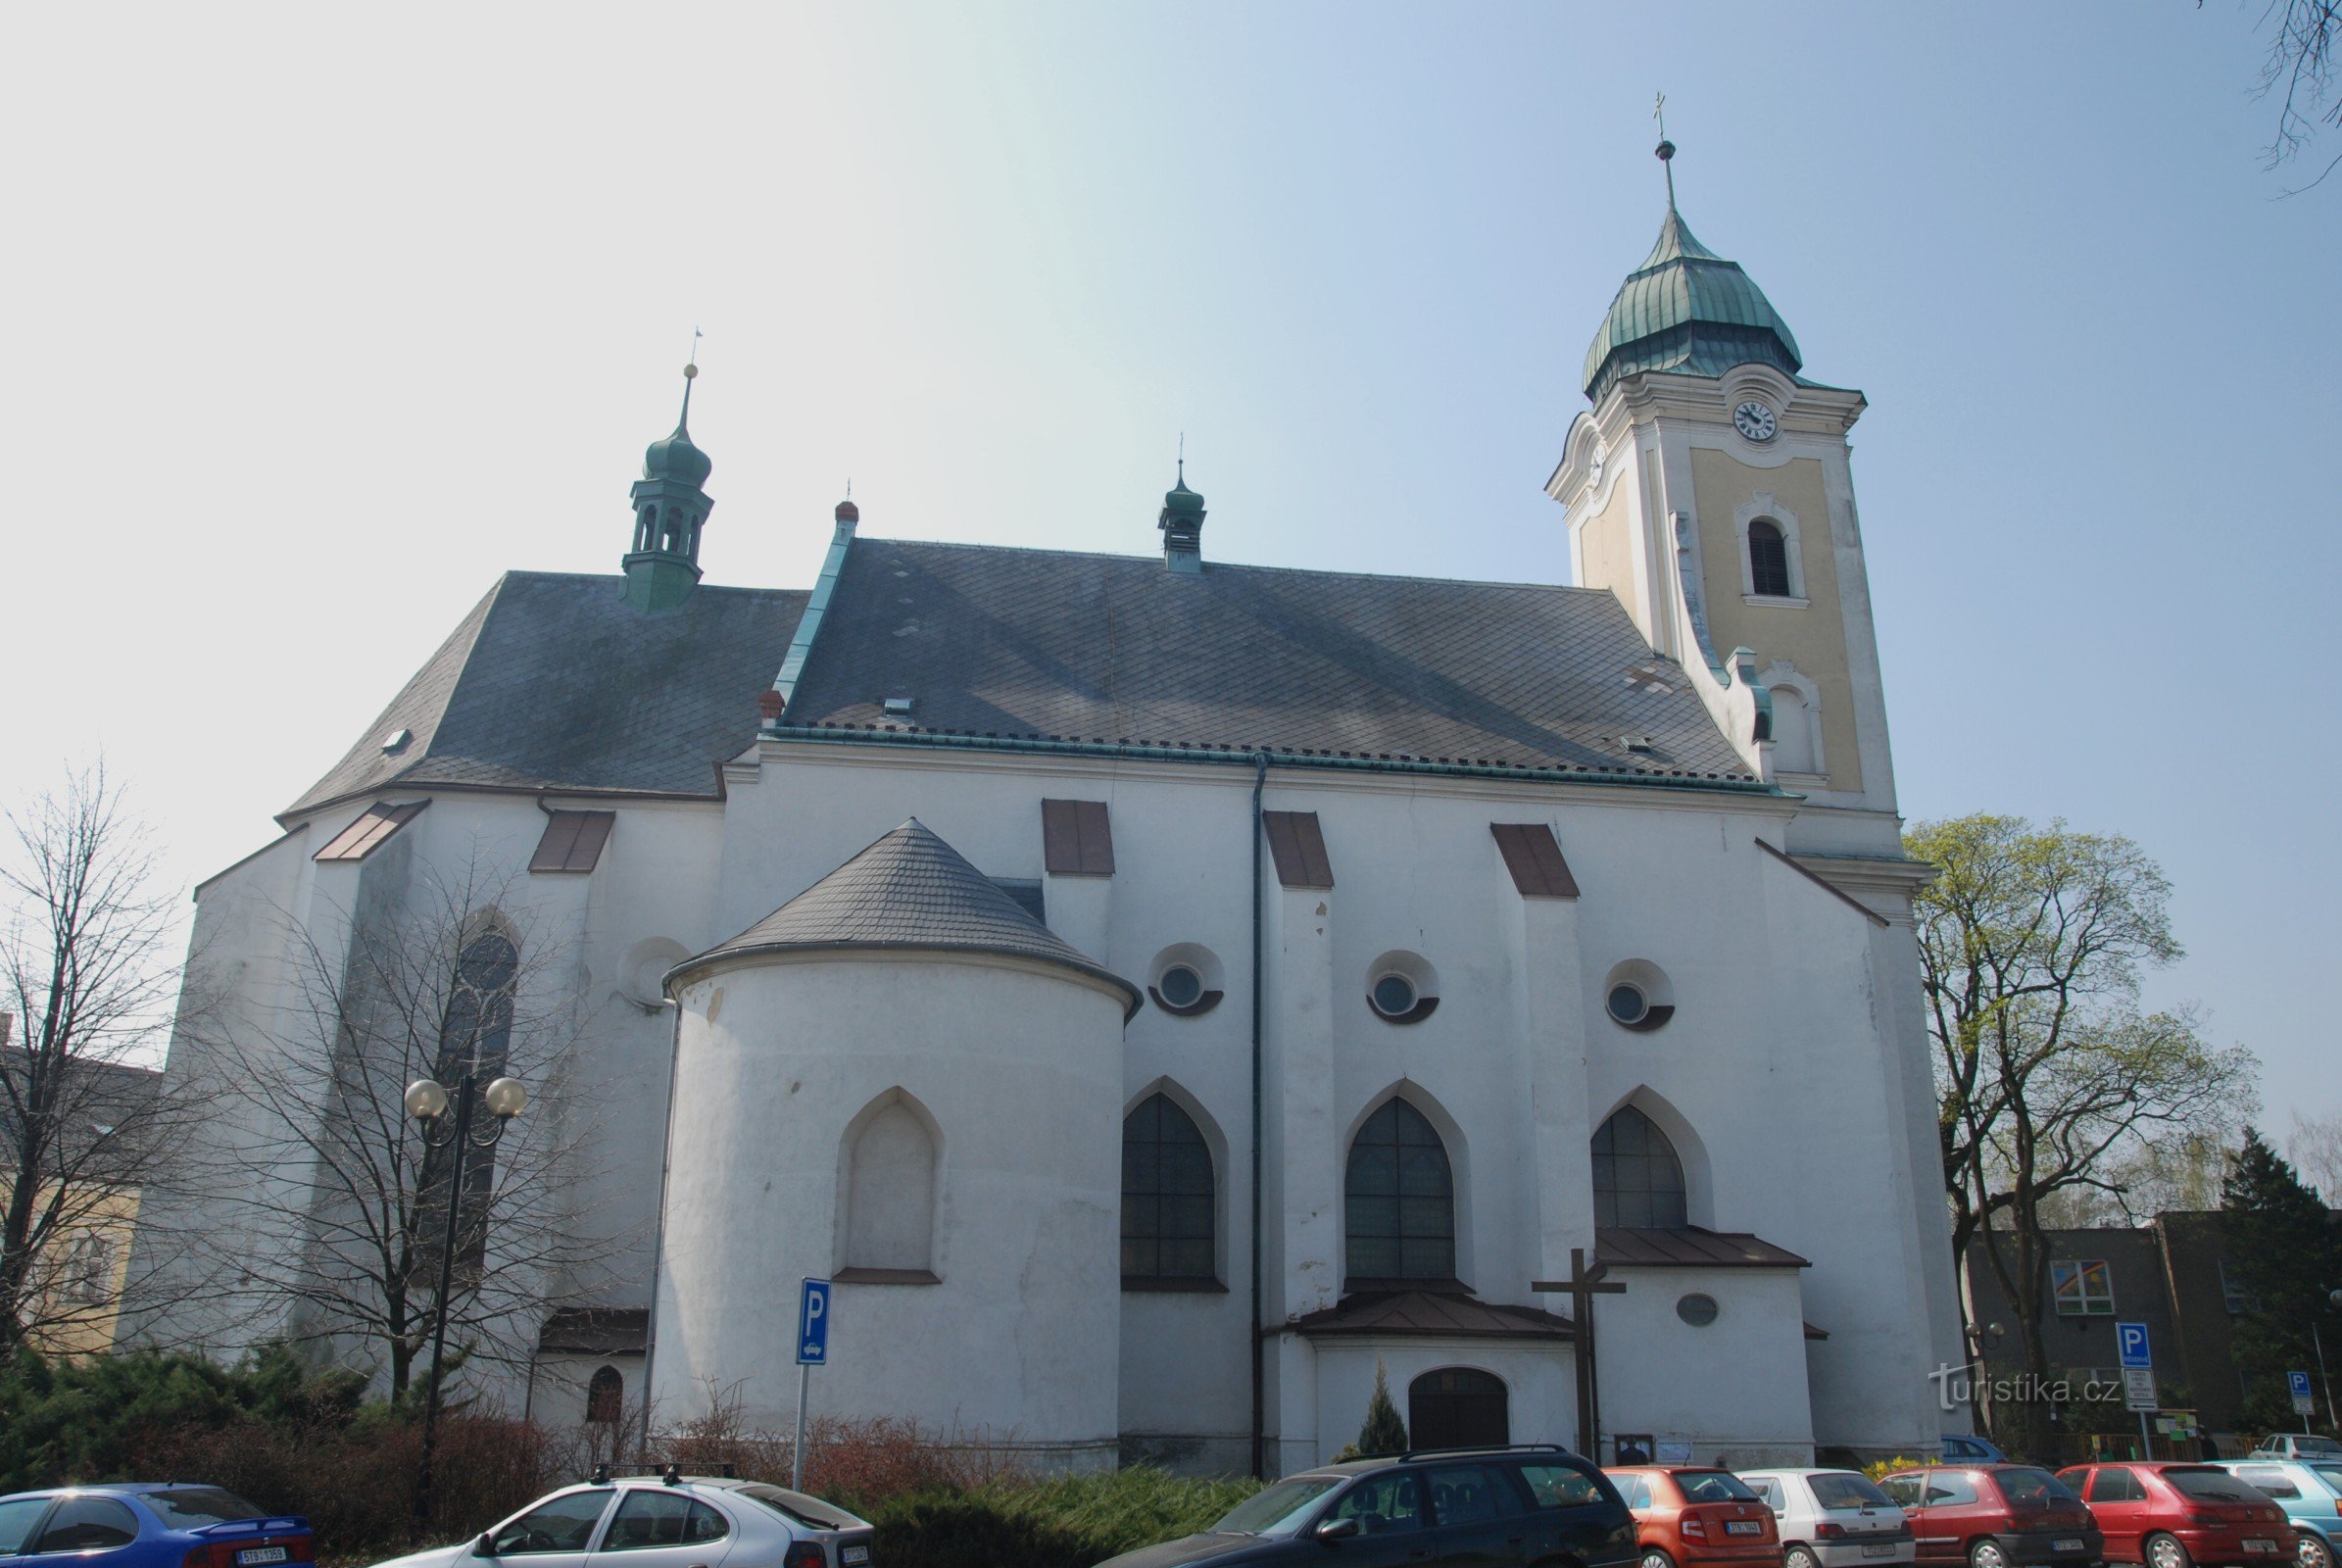 Hlúčín - Church of St. Johannes Døberen